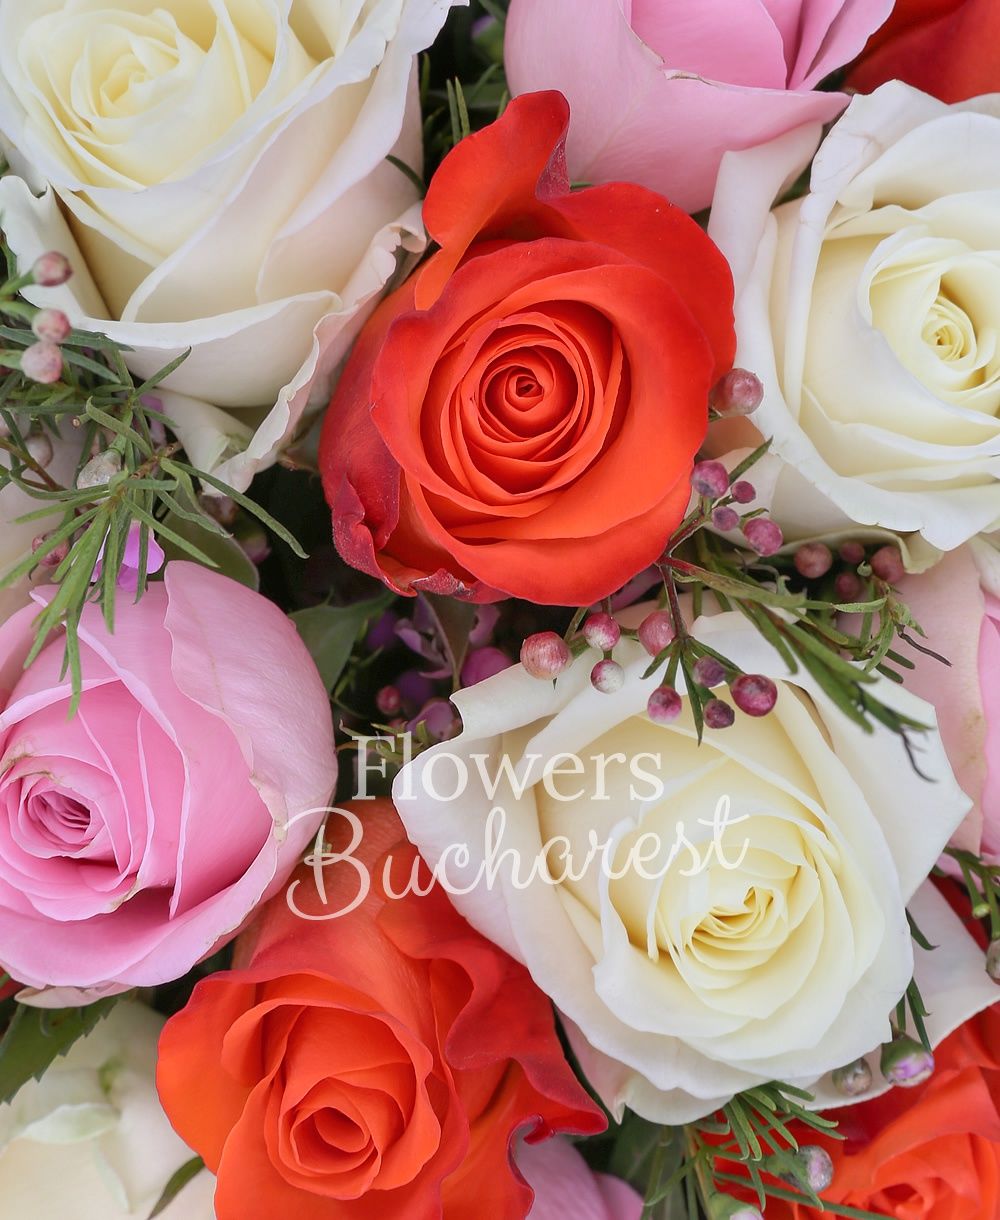 7 white roses, 7 pink roses, 7 orange roses, 5 pink waxflower, 10 aspidistra, greenery